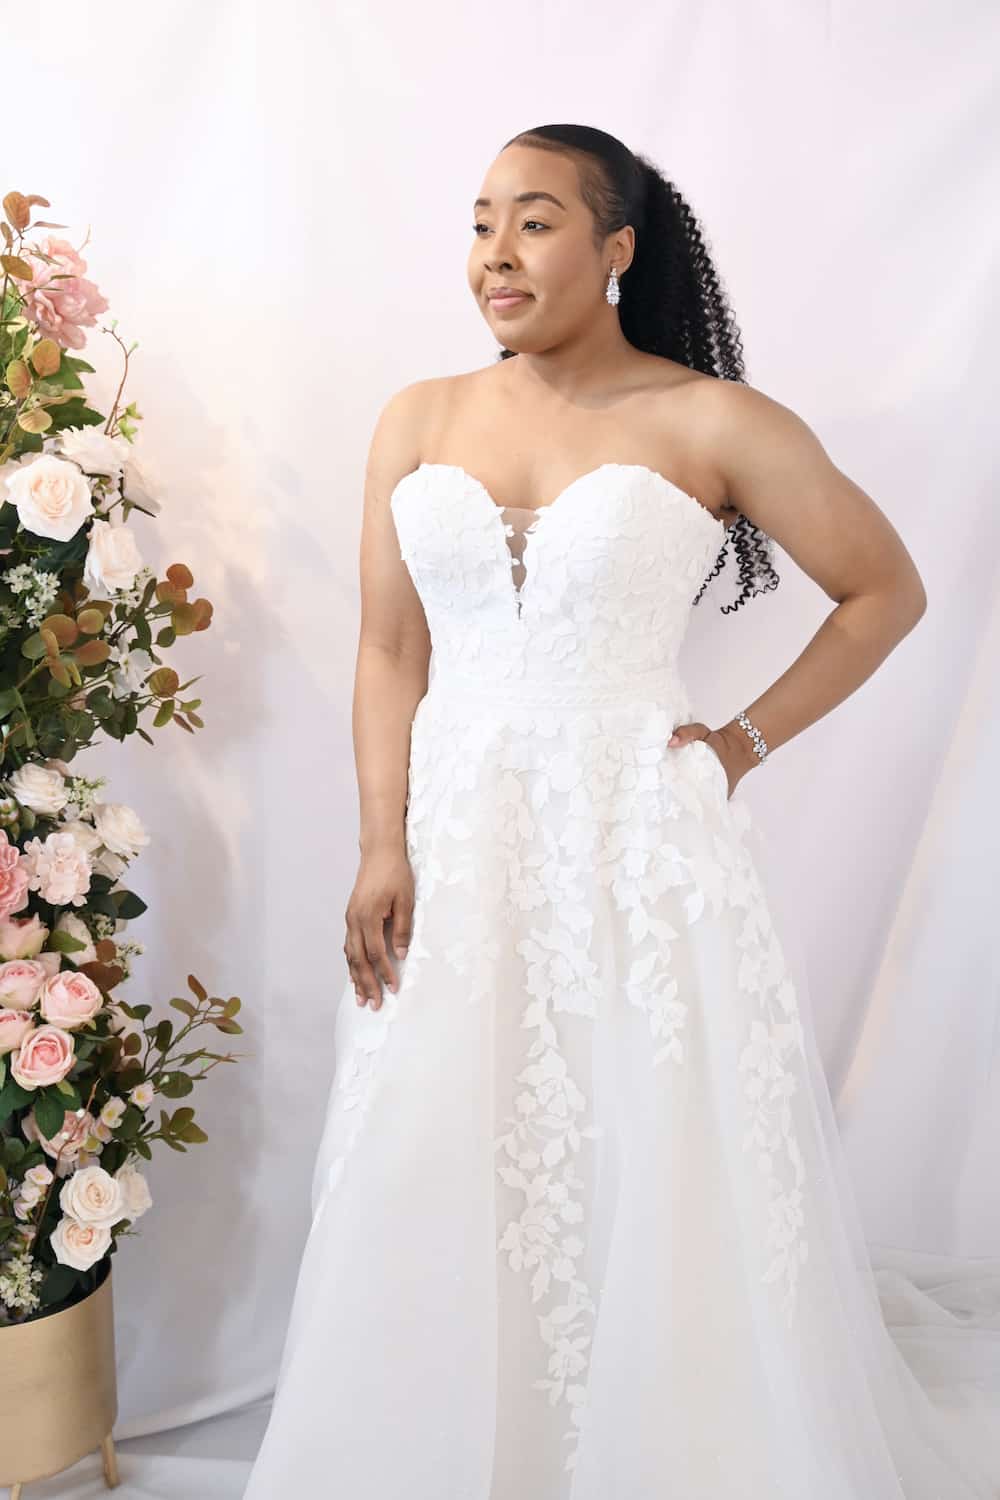 Strapless, Modern Romantic lace A-Line skirt wedding dress - Camile